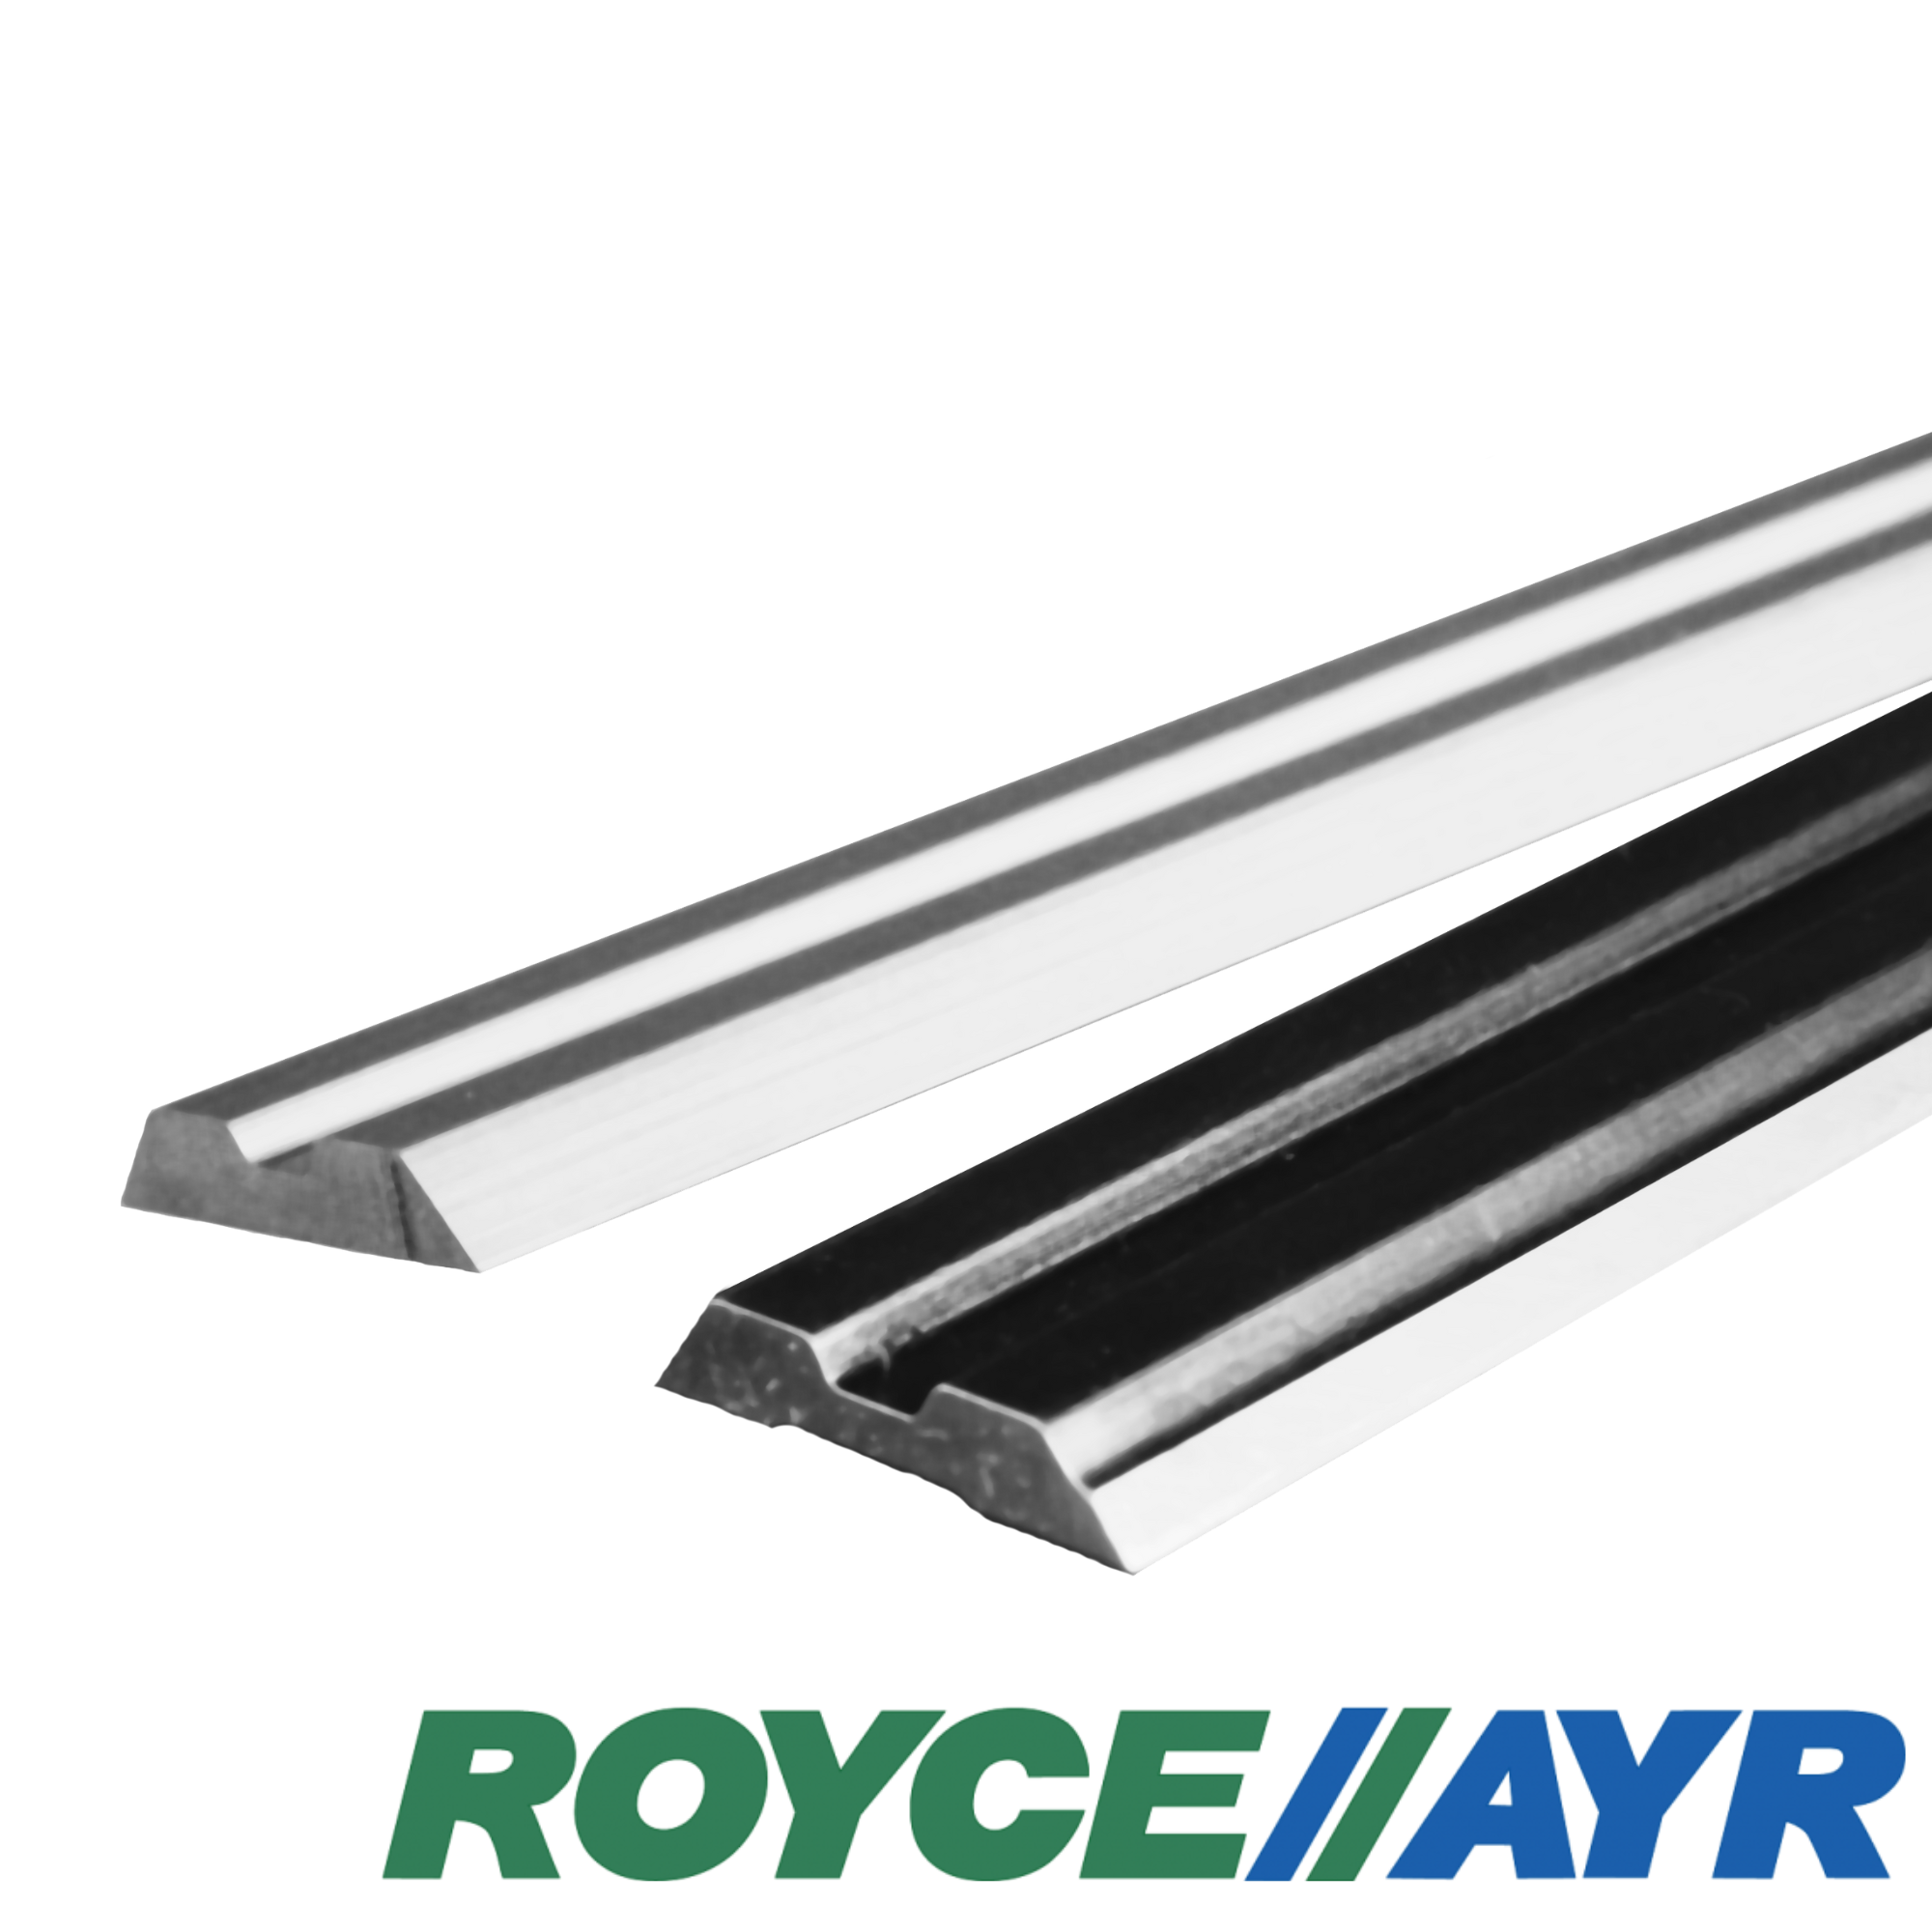 Royce//Ayr - Centroloc - HSS - L: 240mm H: 16mm M: 3mm